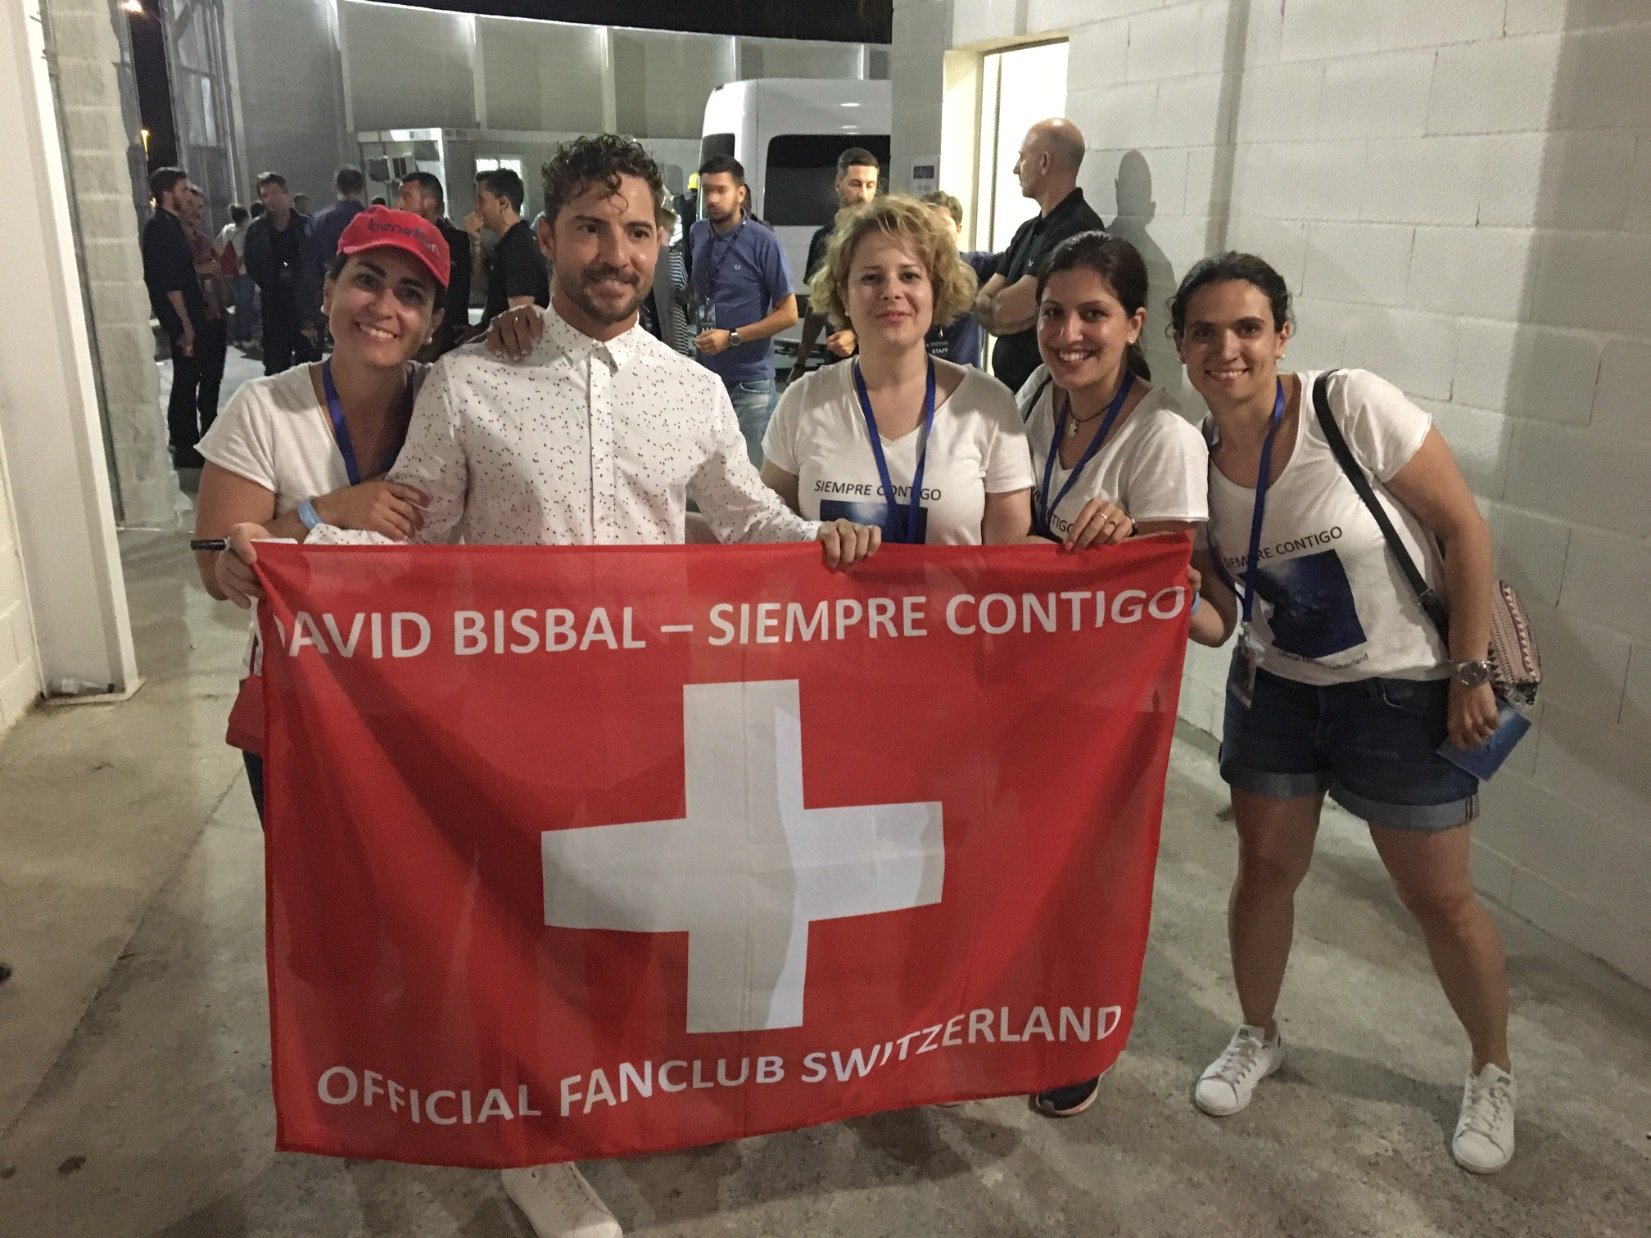 Official Fanclub David Bisbal Switzerland. 
Fanclub oficial de David Bisbal en Suiza.
Siguenos en Instagram: DBSwitzerland Facebook: DB Switzerland